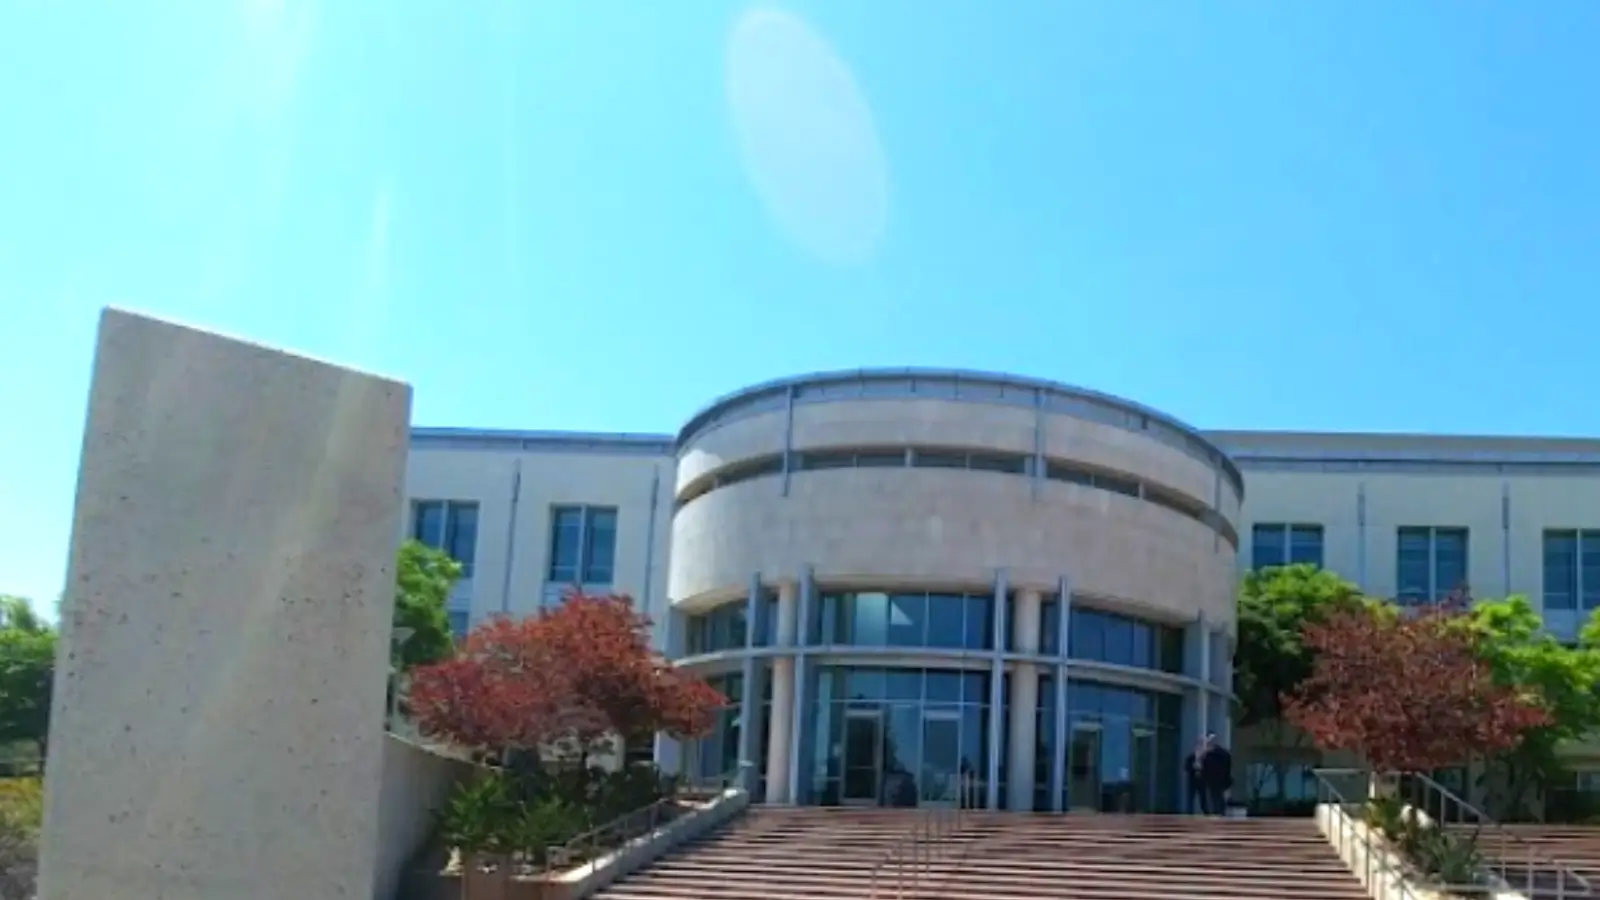 Murrirtea Courthouse